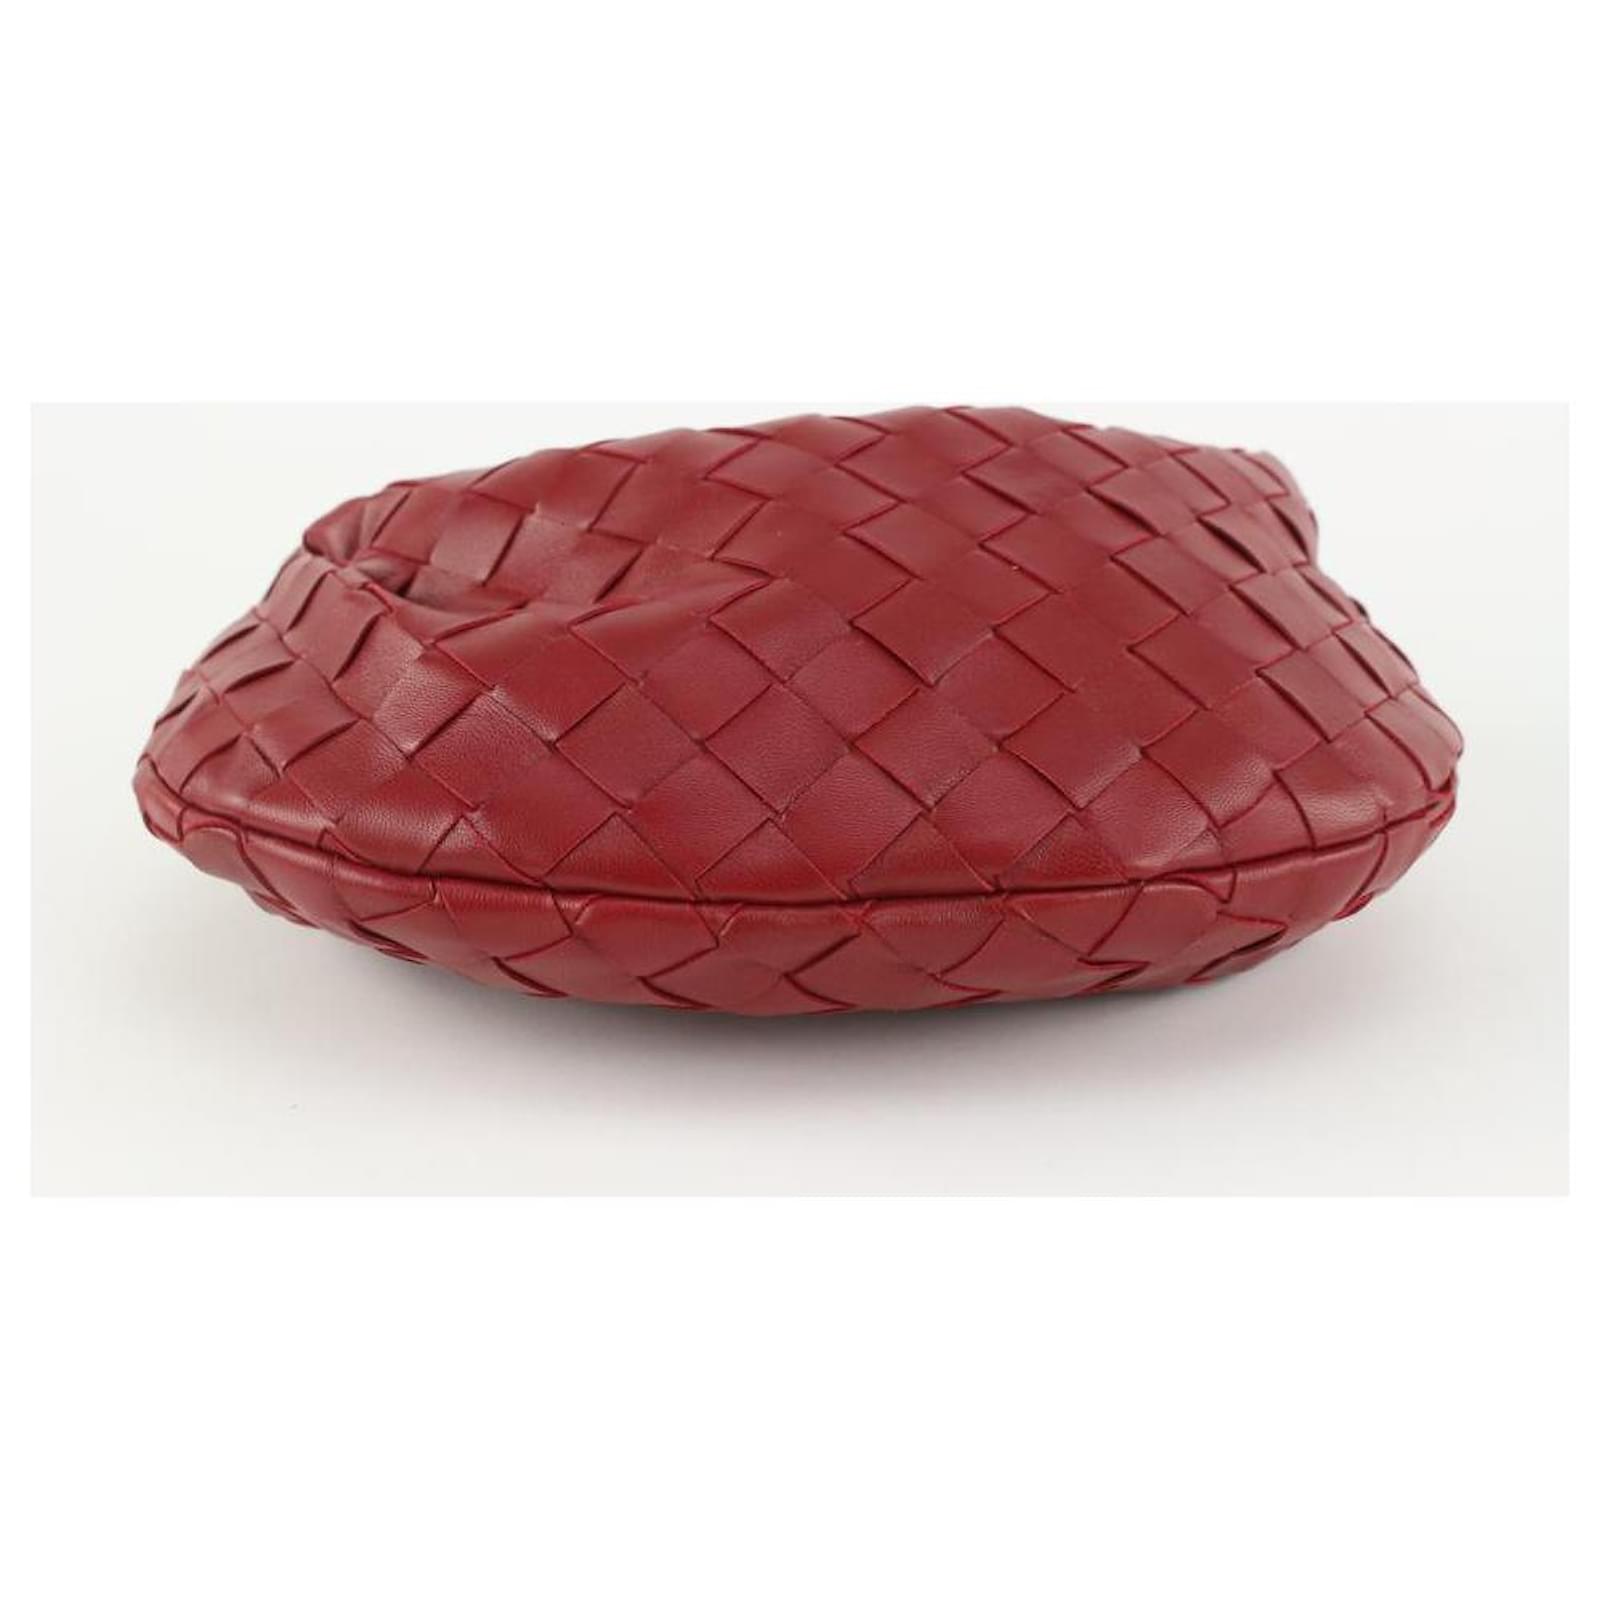 Bottega Veneta Loop Mini Bag in Red Intrecciato Leather — UFO No More